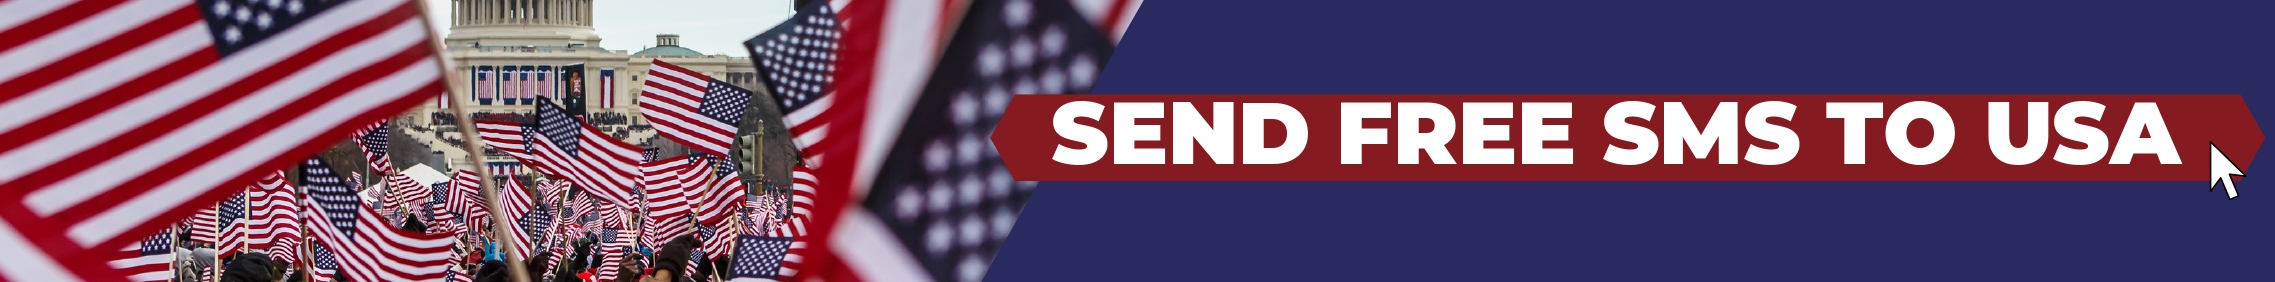 Send Free SMS to USA